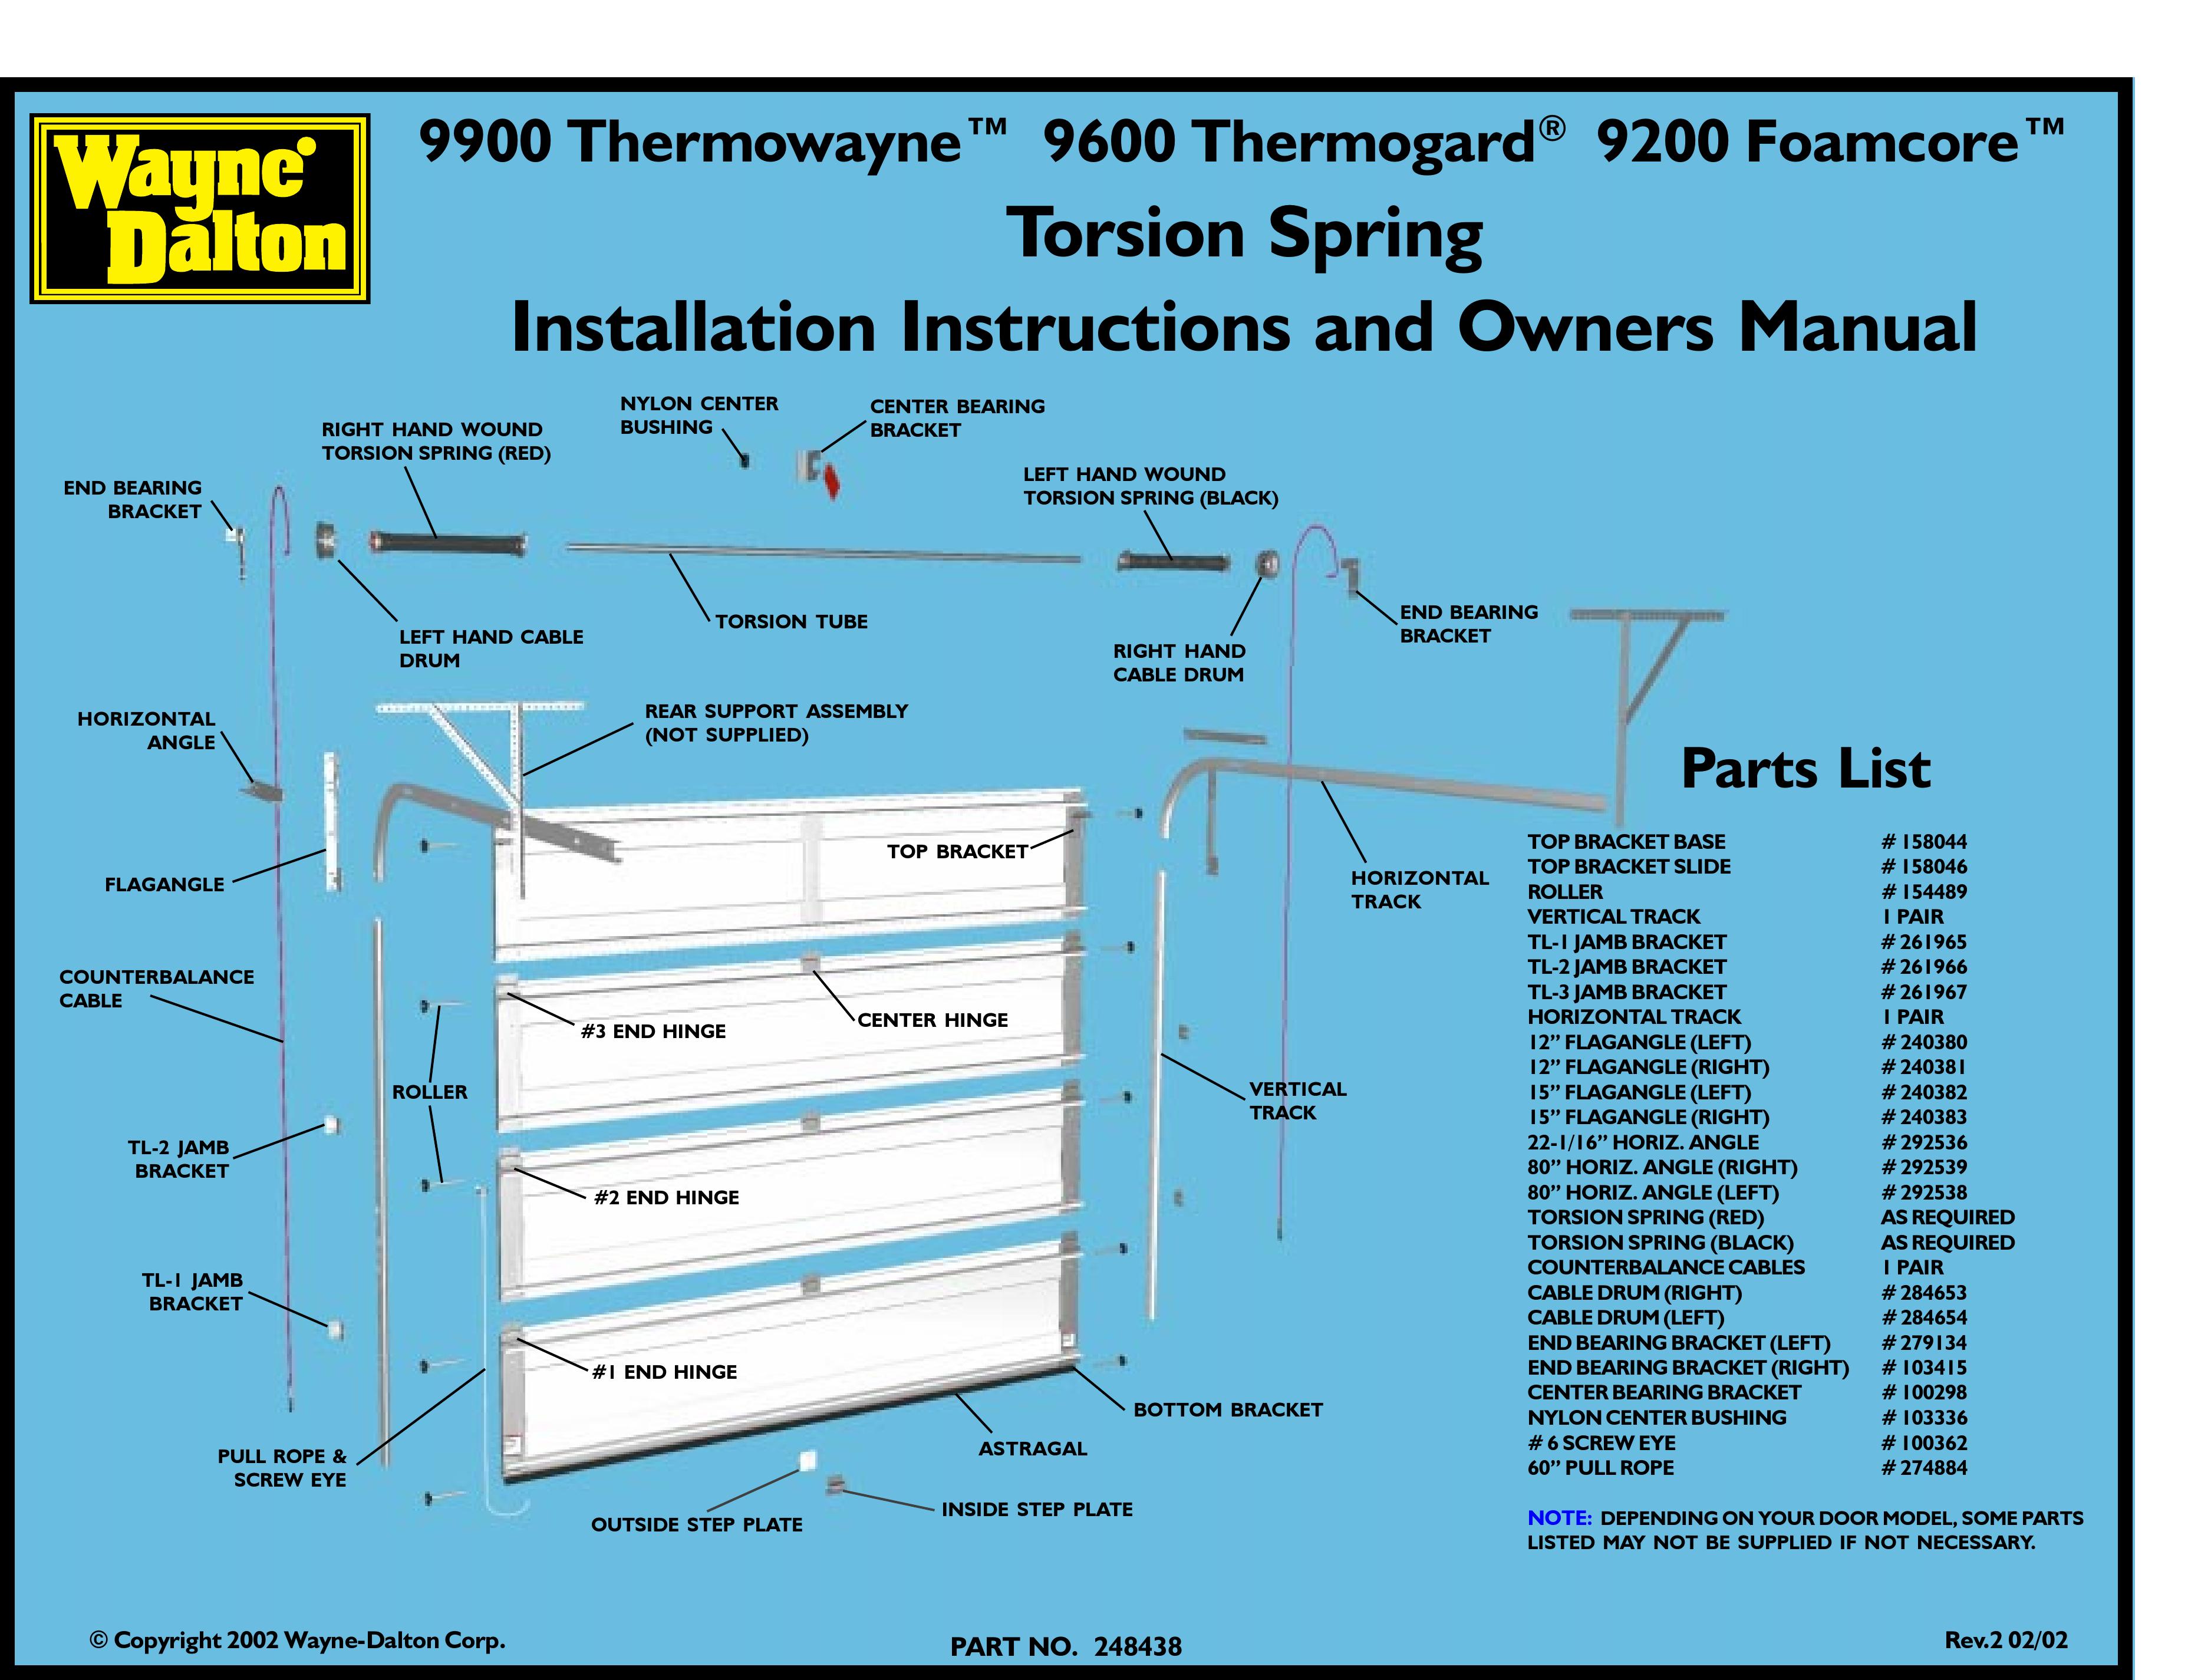 Wayne-Dalton 9600 Thermoguard Thermometer User Manual